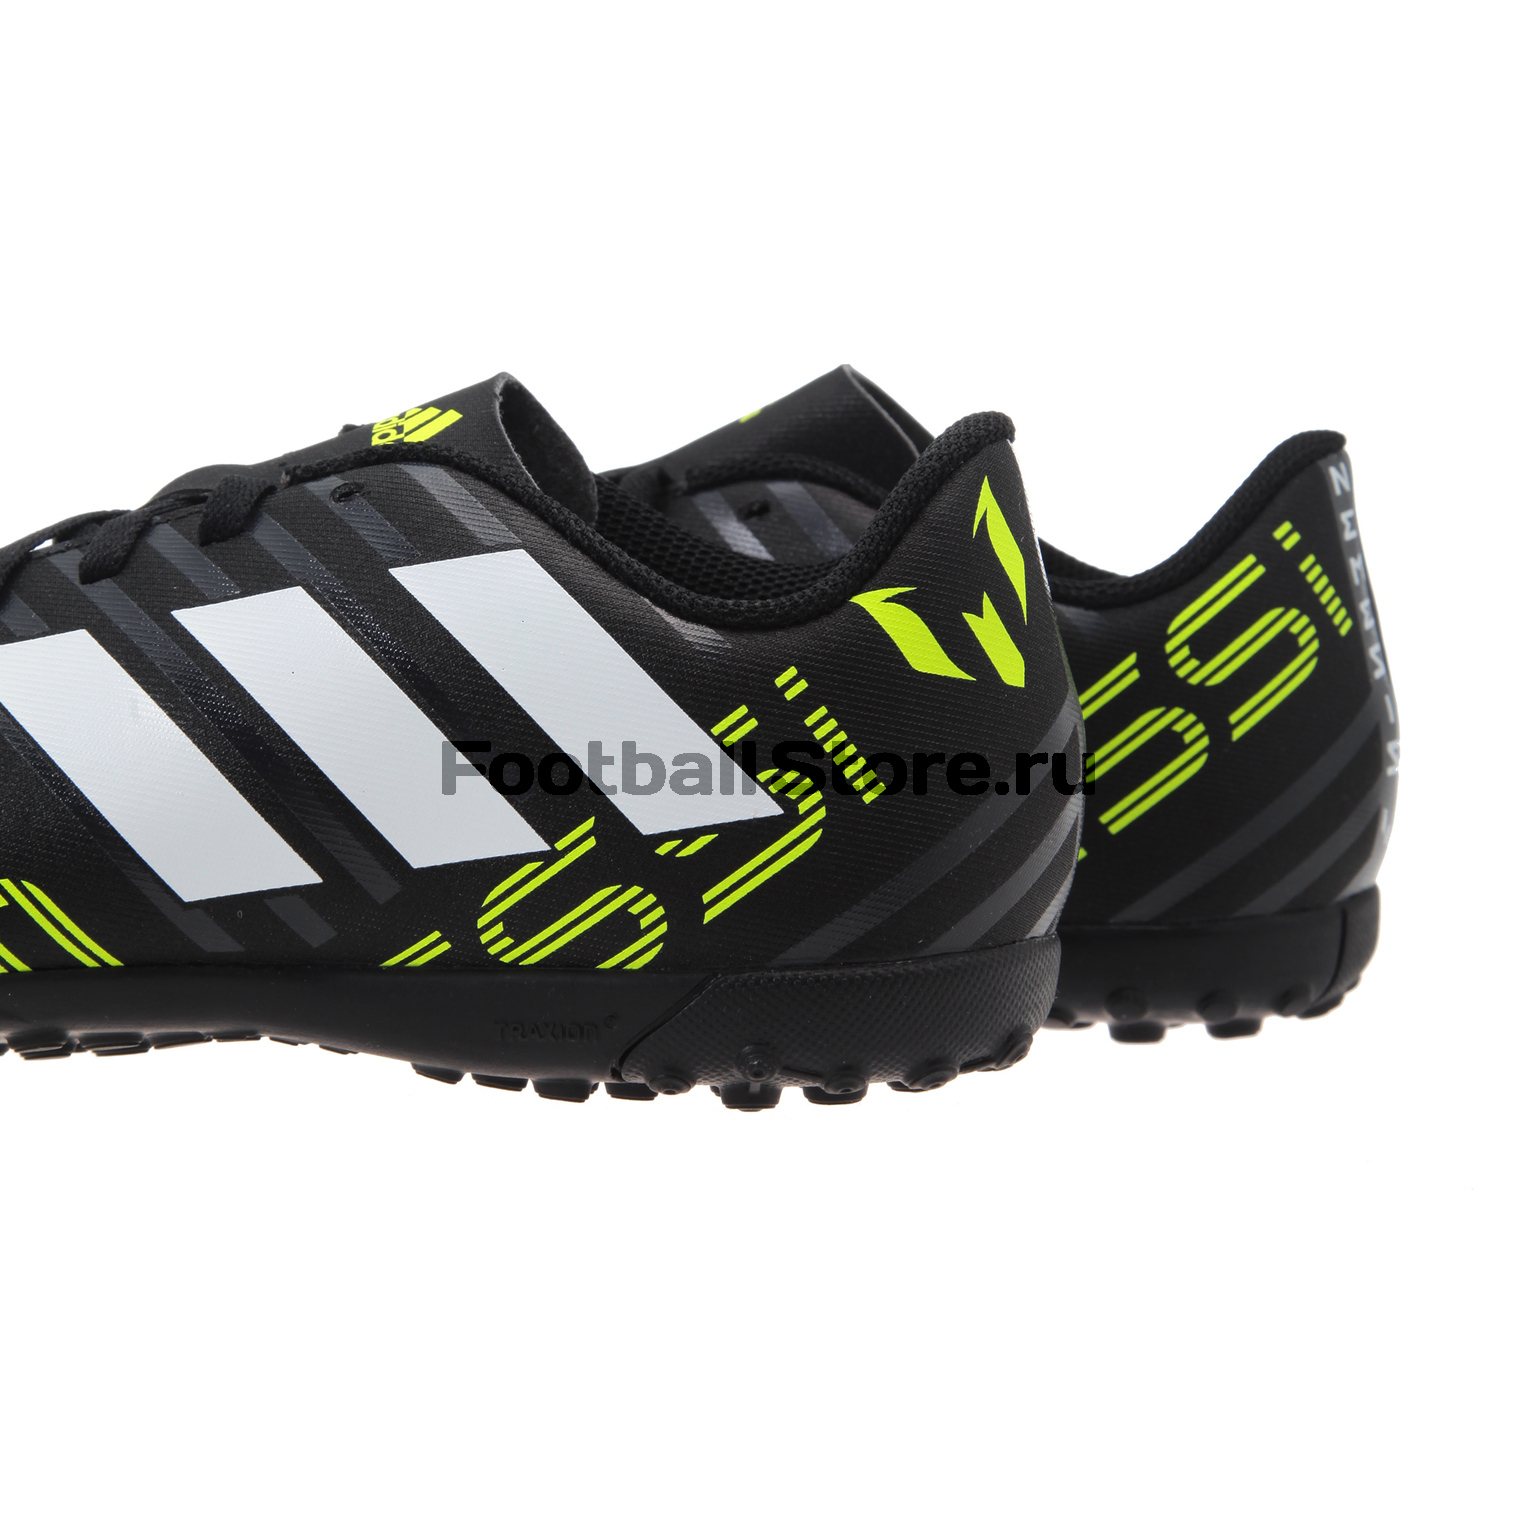 Шиповки детские Adidas Nemeziz Messi 17.4 TF CG2975